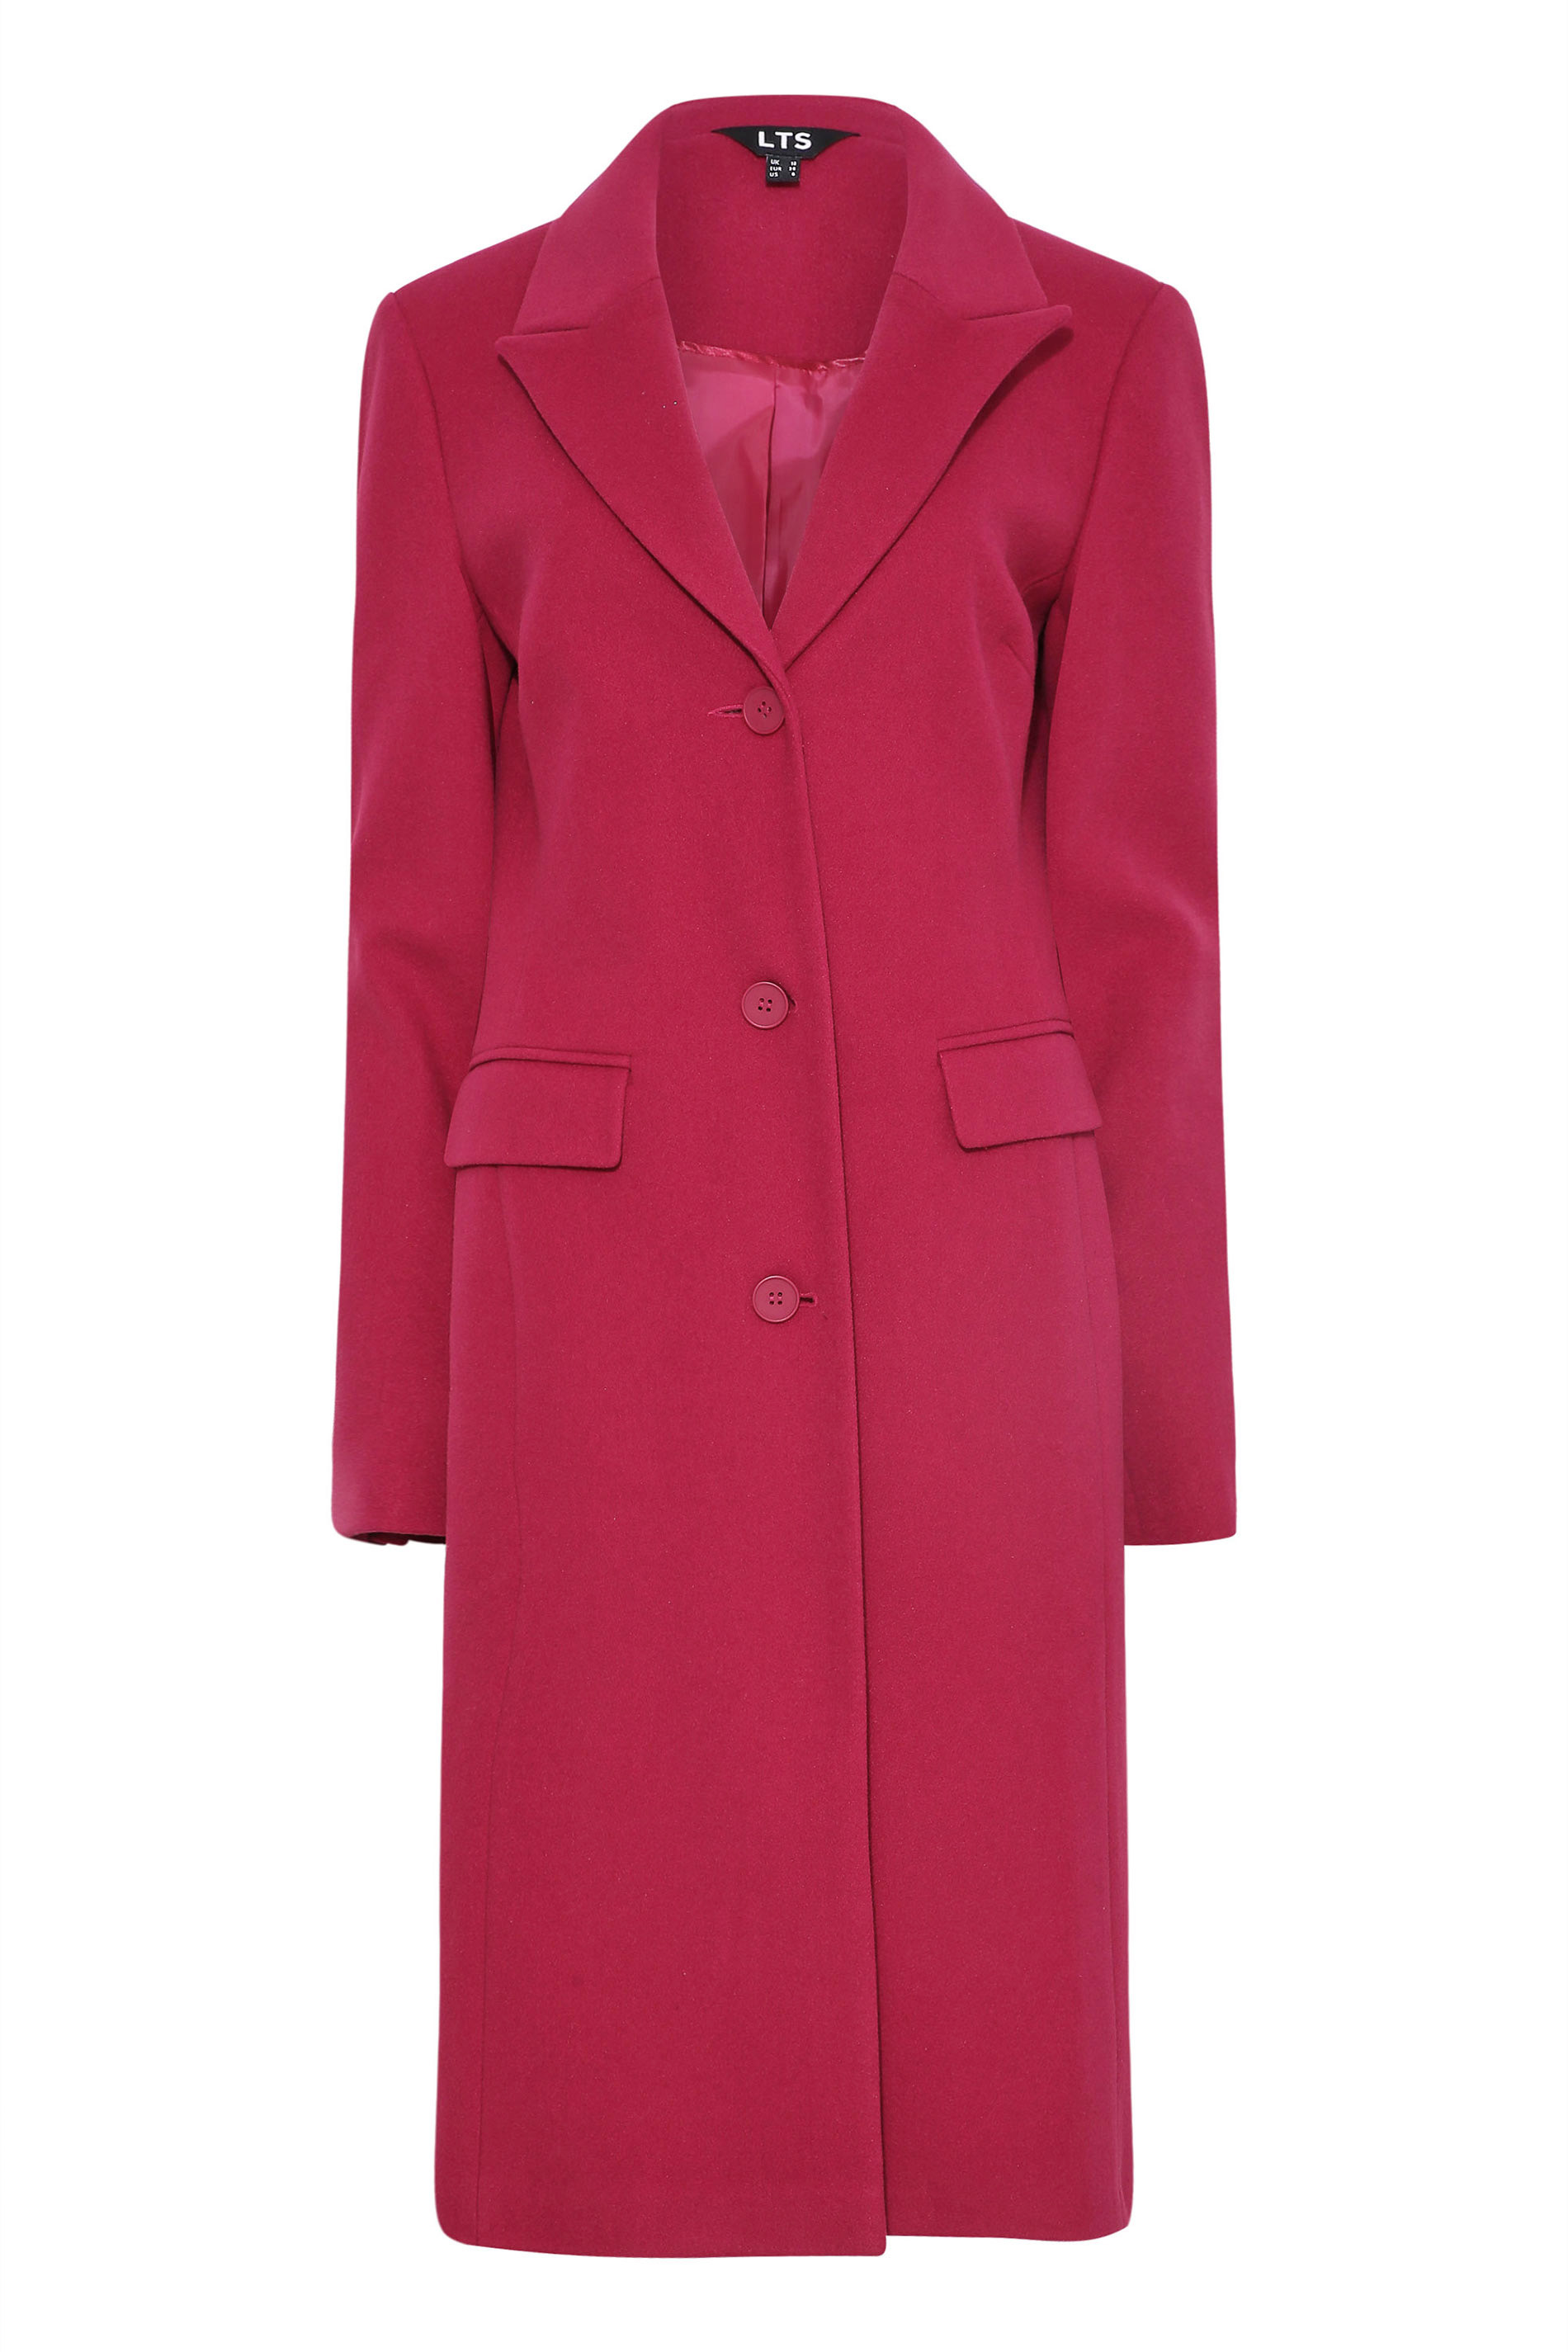 LTS Tall Women's Pink Midi Formal Coat | Long Tall Sally